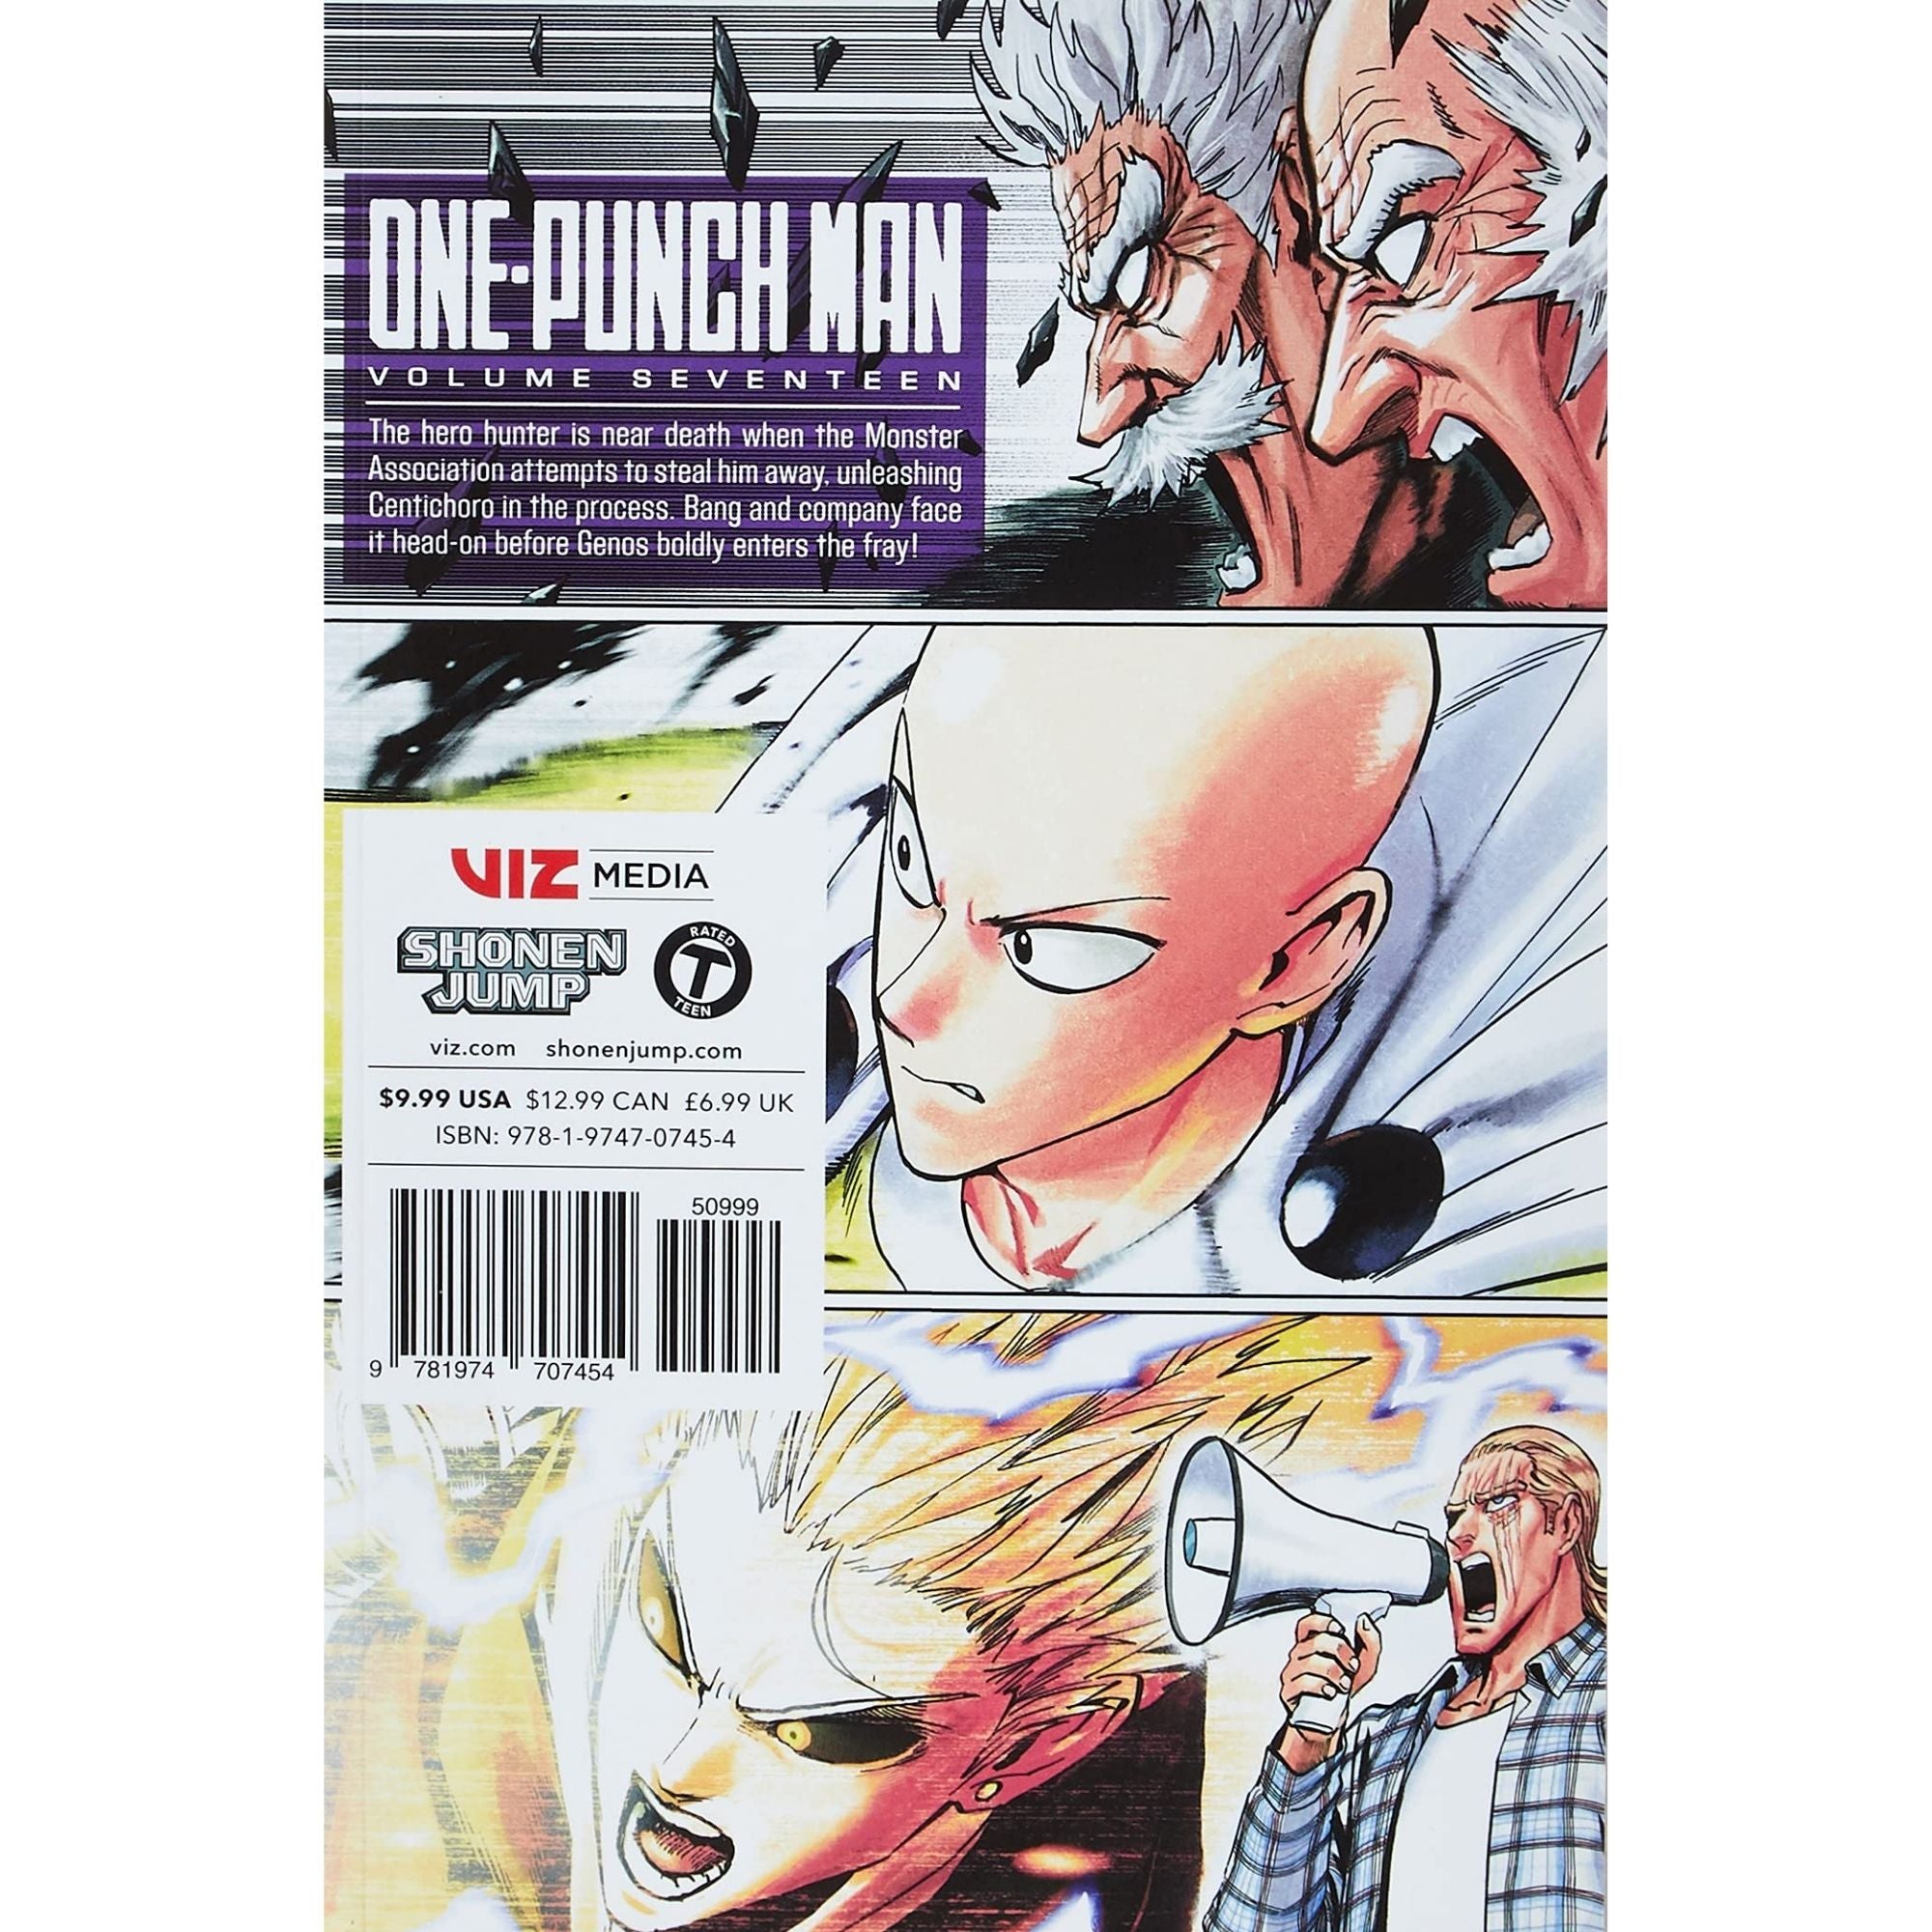 Shueisha Jump Comics Yusuke Murata One Punch Man 1 ～ 23 Volume latest set